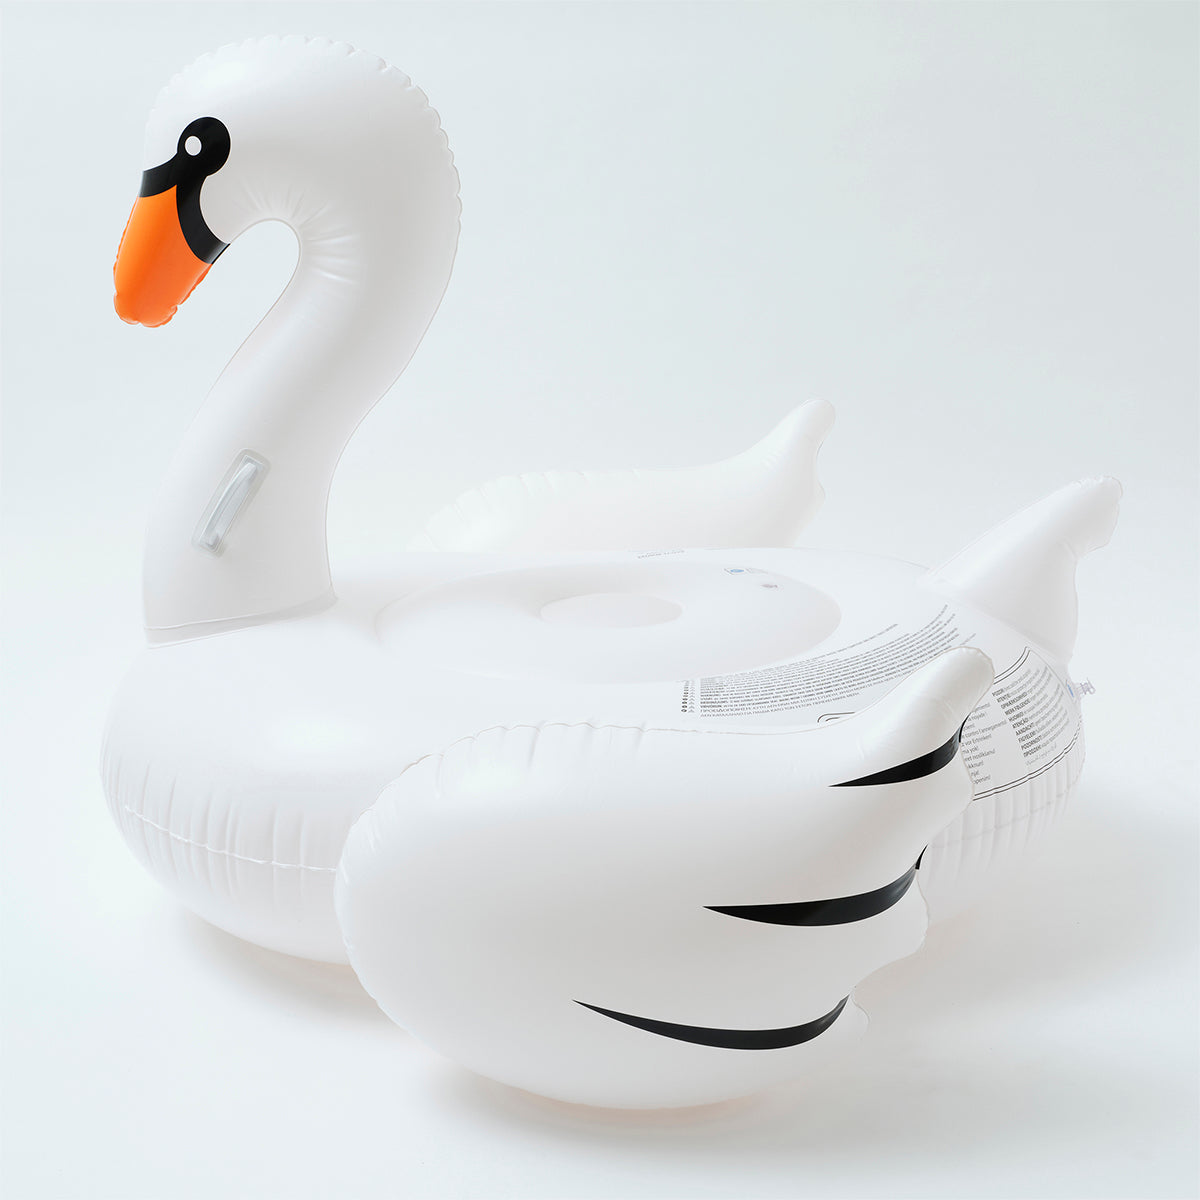 Sunnylife Resort Original Luxe Ride-On Flat Swan White on White